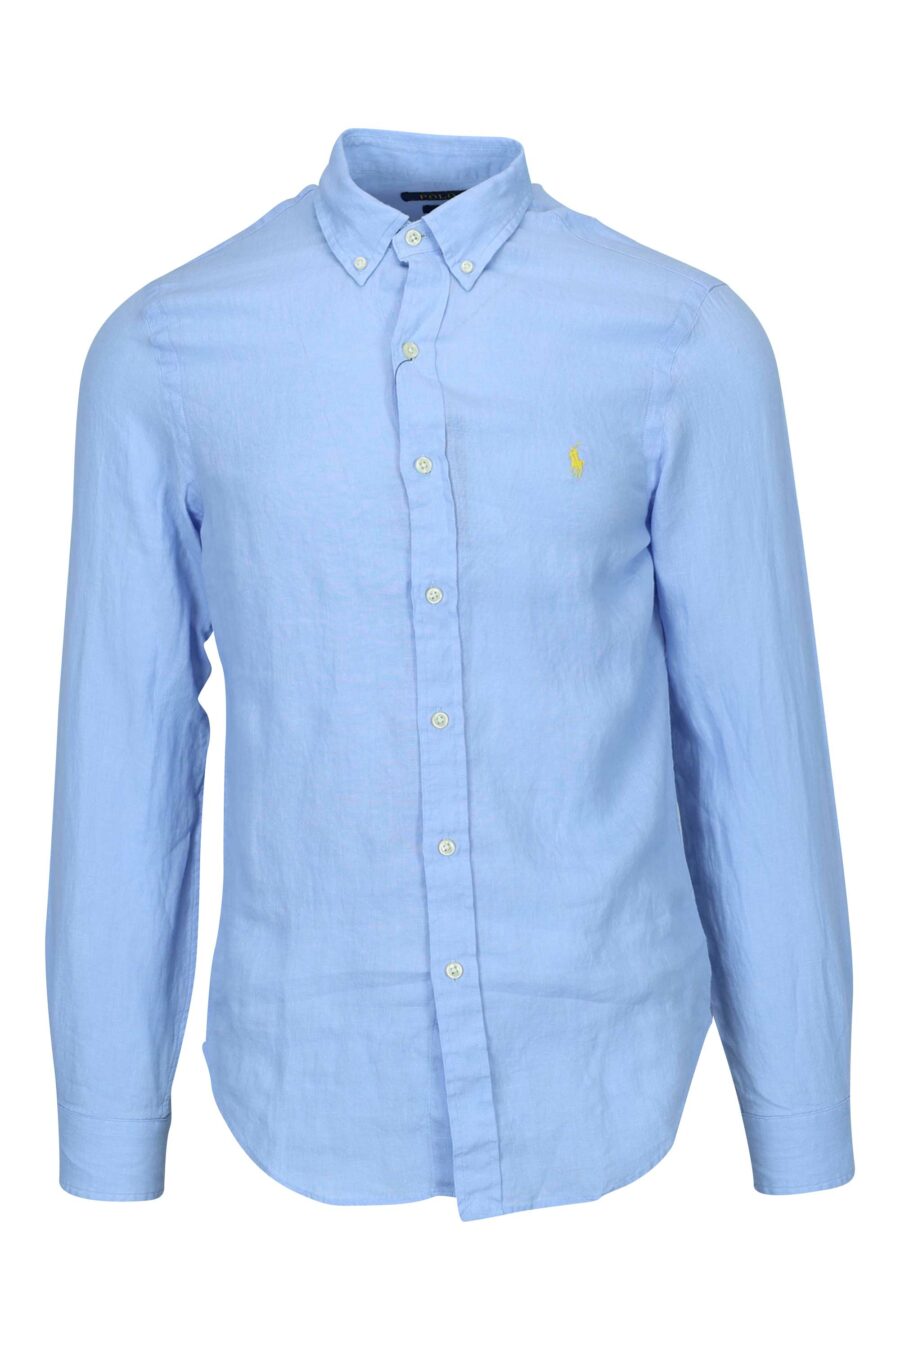 Blue shirt with mini-logo "polo" - 3616535910850